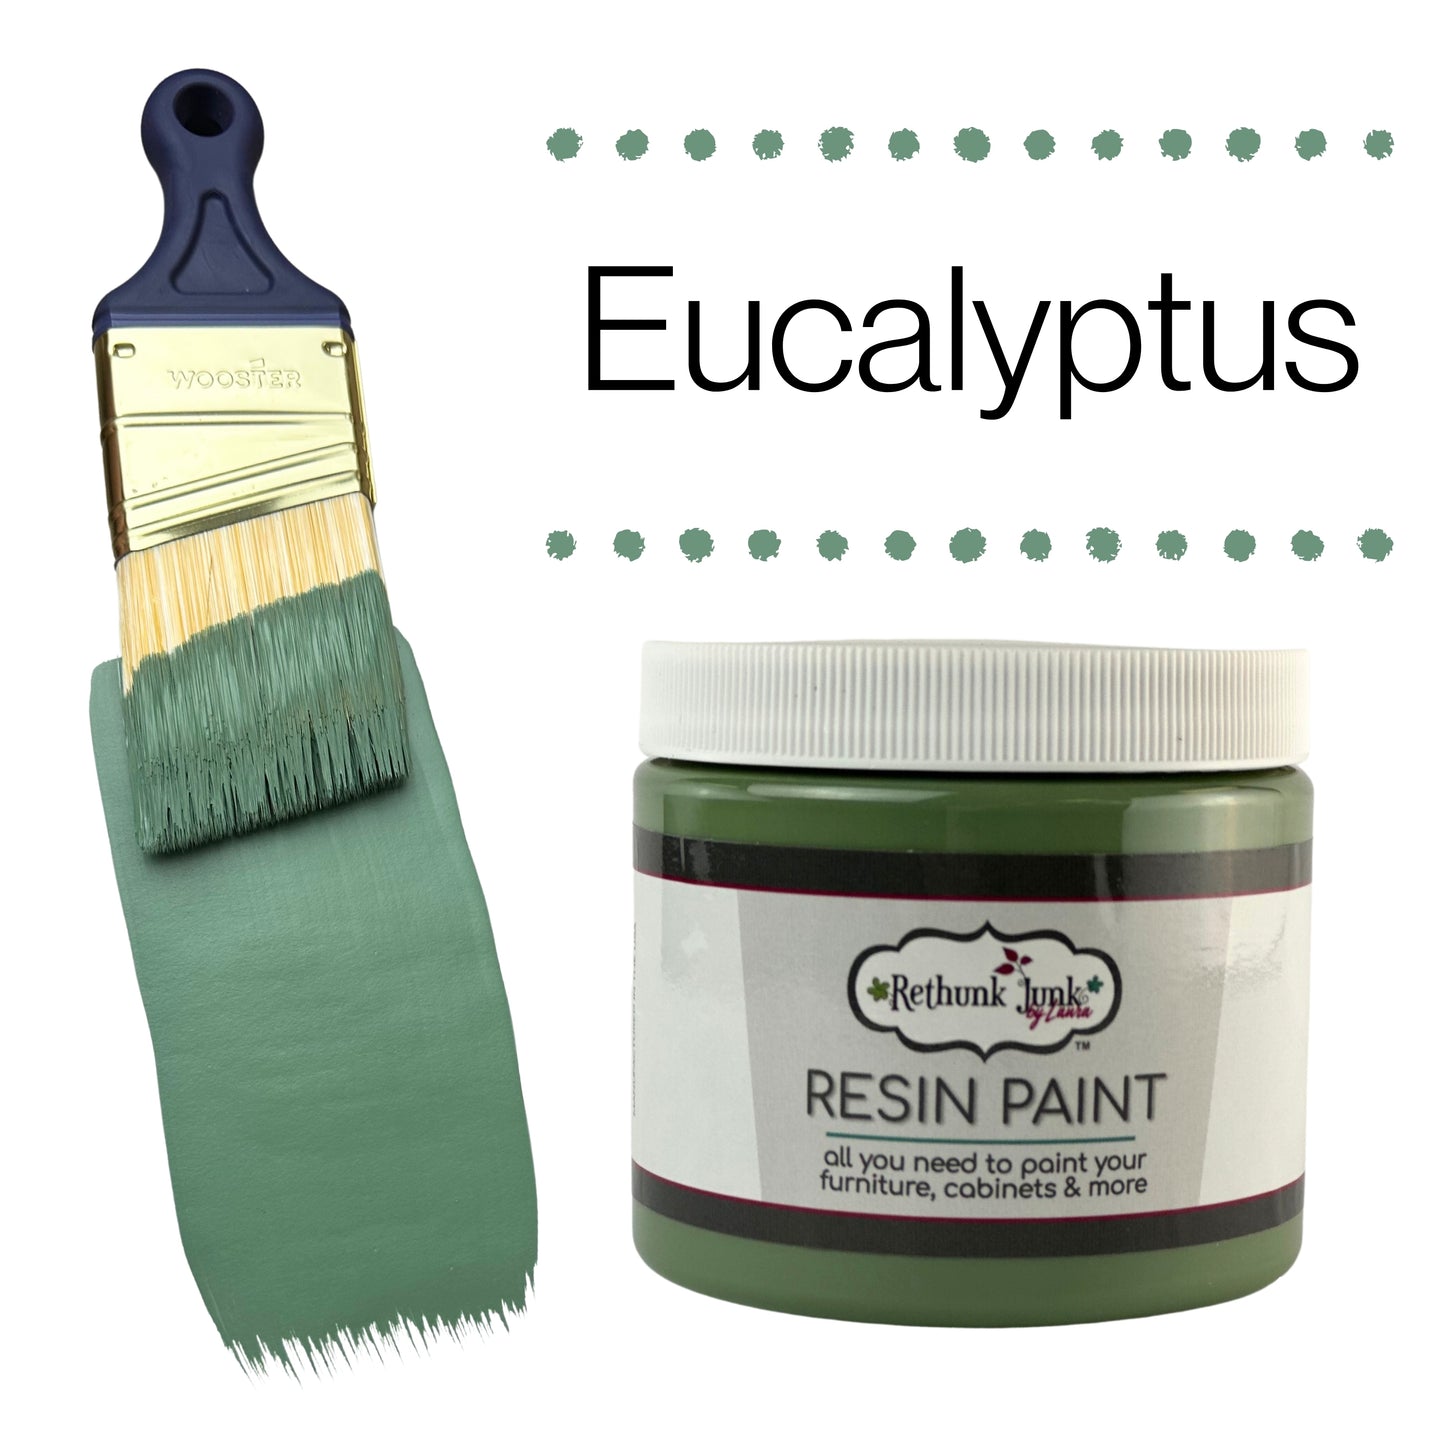 Rethunk Junk Resin Paint in Eucalyptus